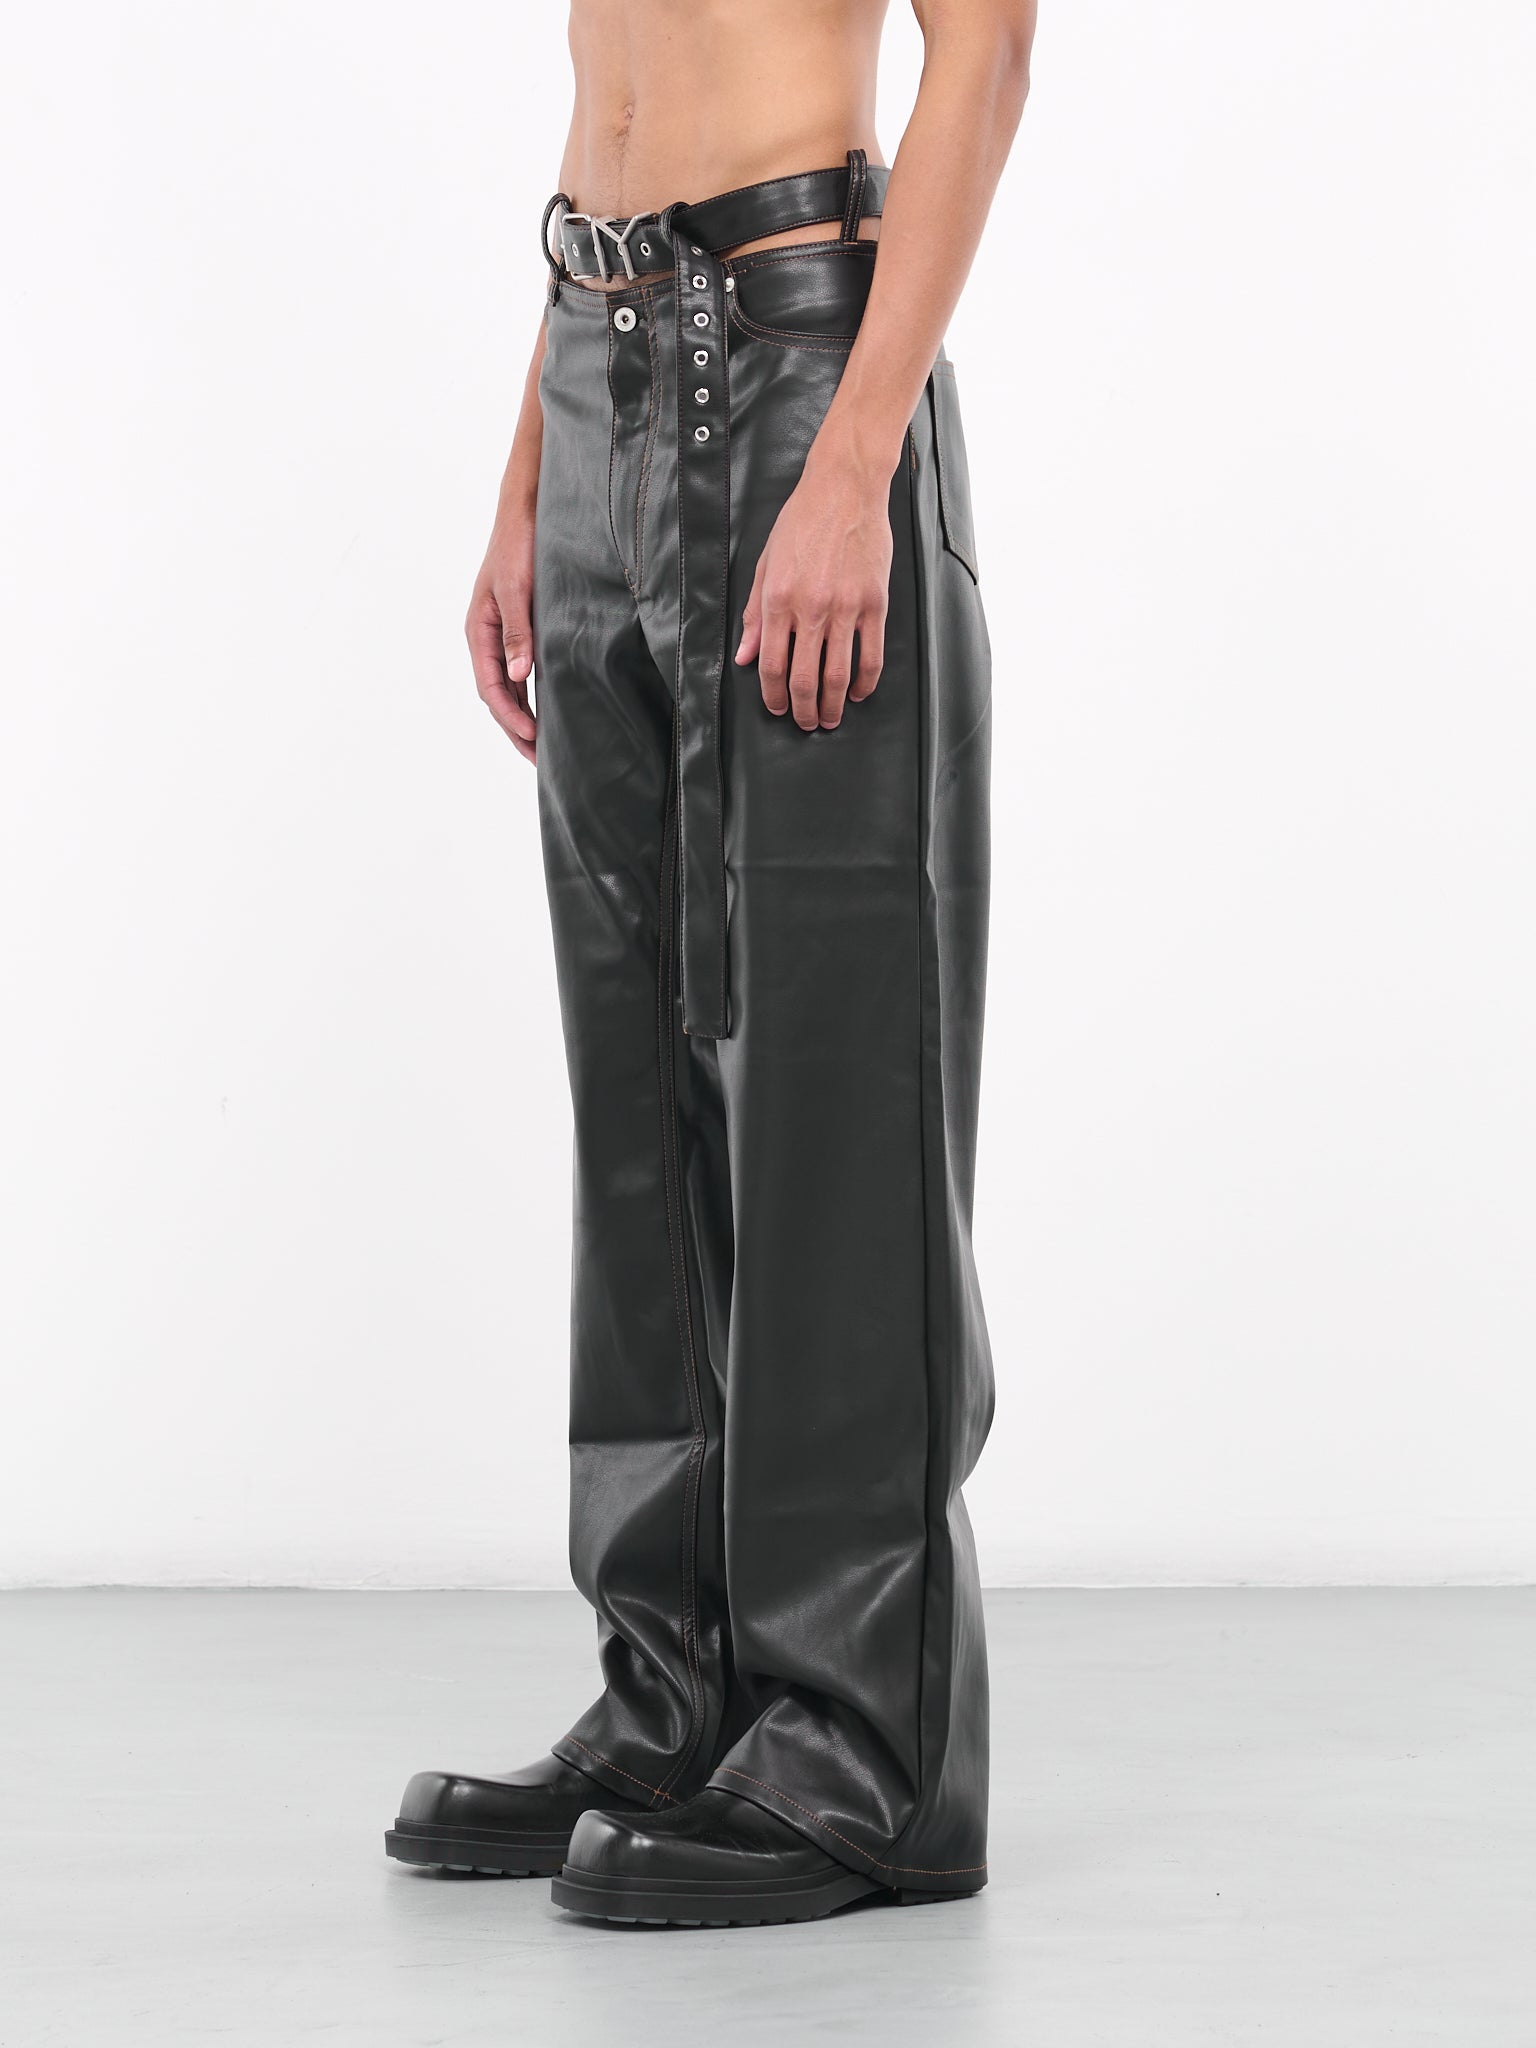 Black Paneled Leather Pants by MM6 Maison Margiela on Sale